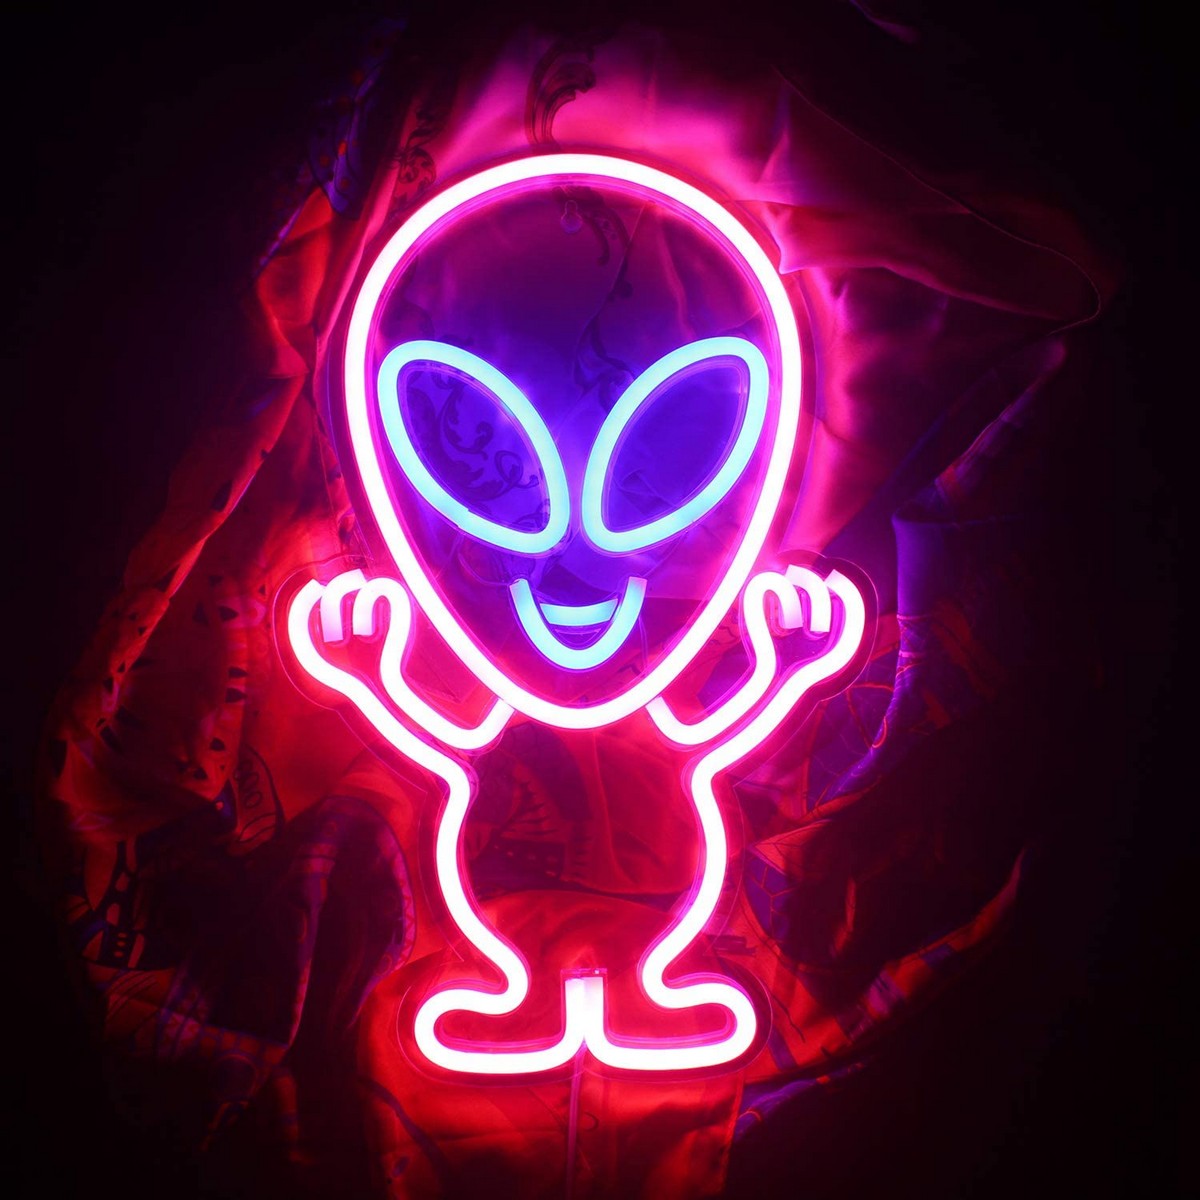 led neon logo shining on the wall - alien